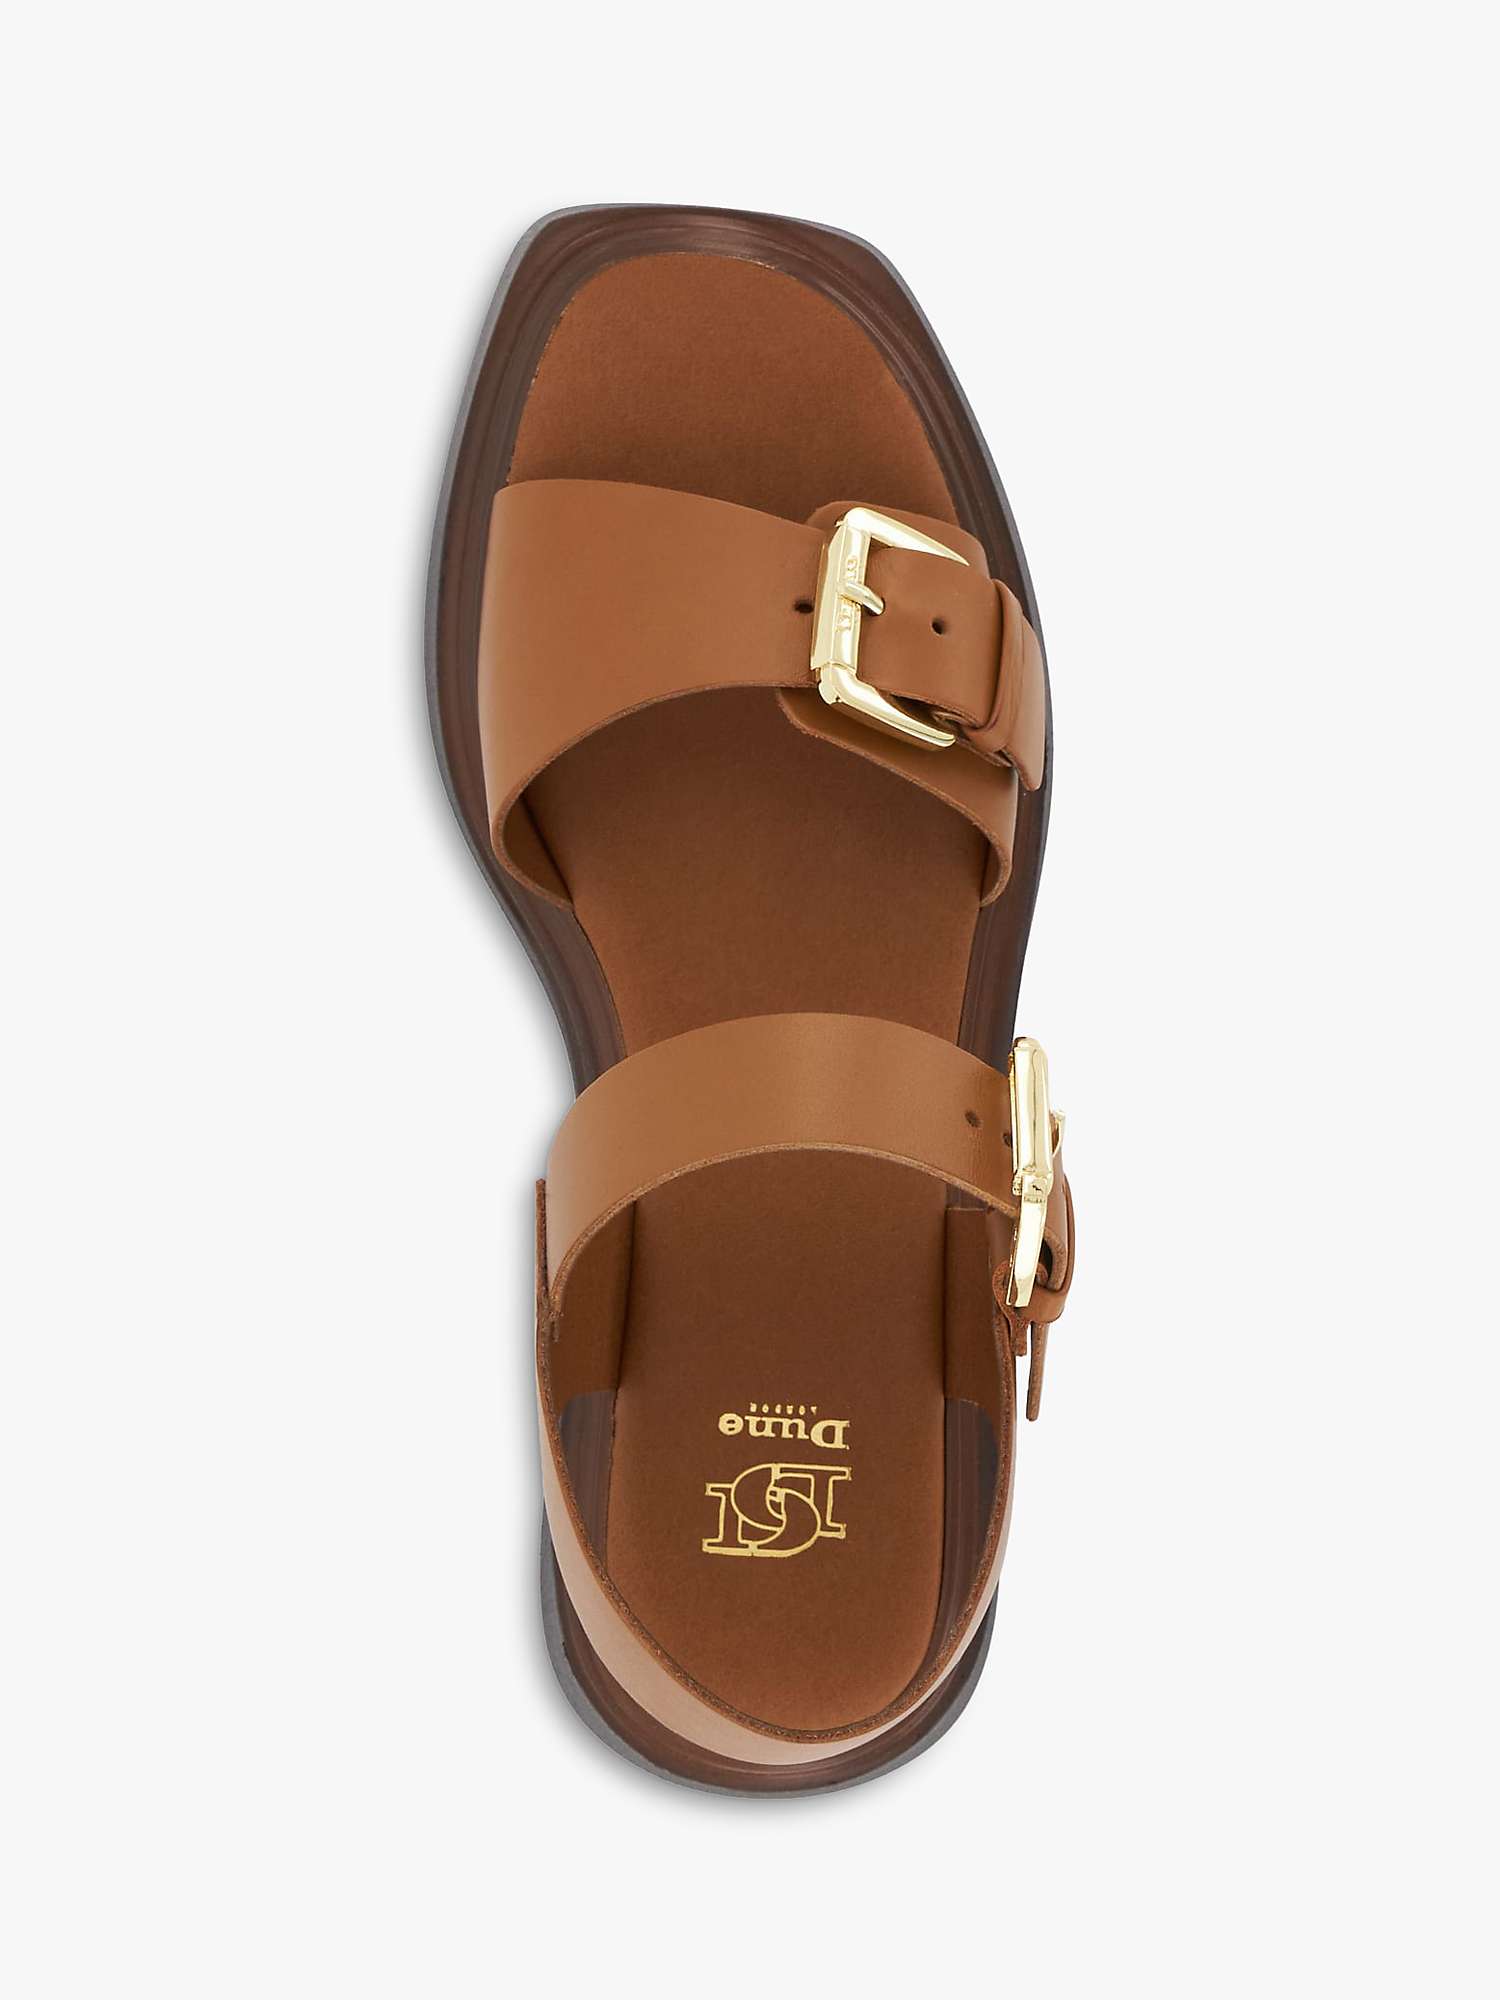 Buy Dune Loells Leather Flatform Sandals Online at johnlewis.com